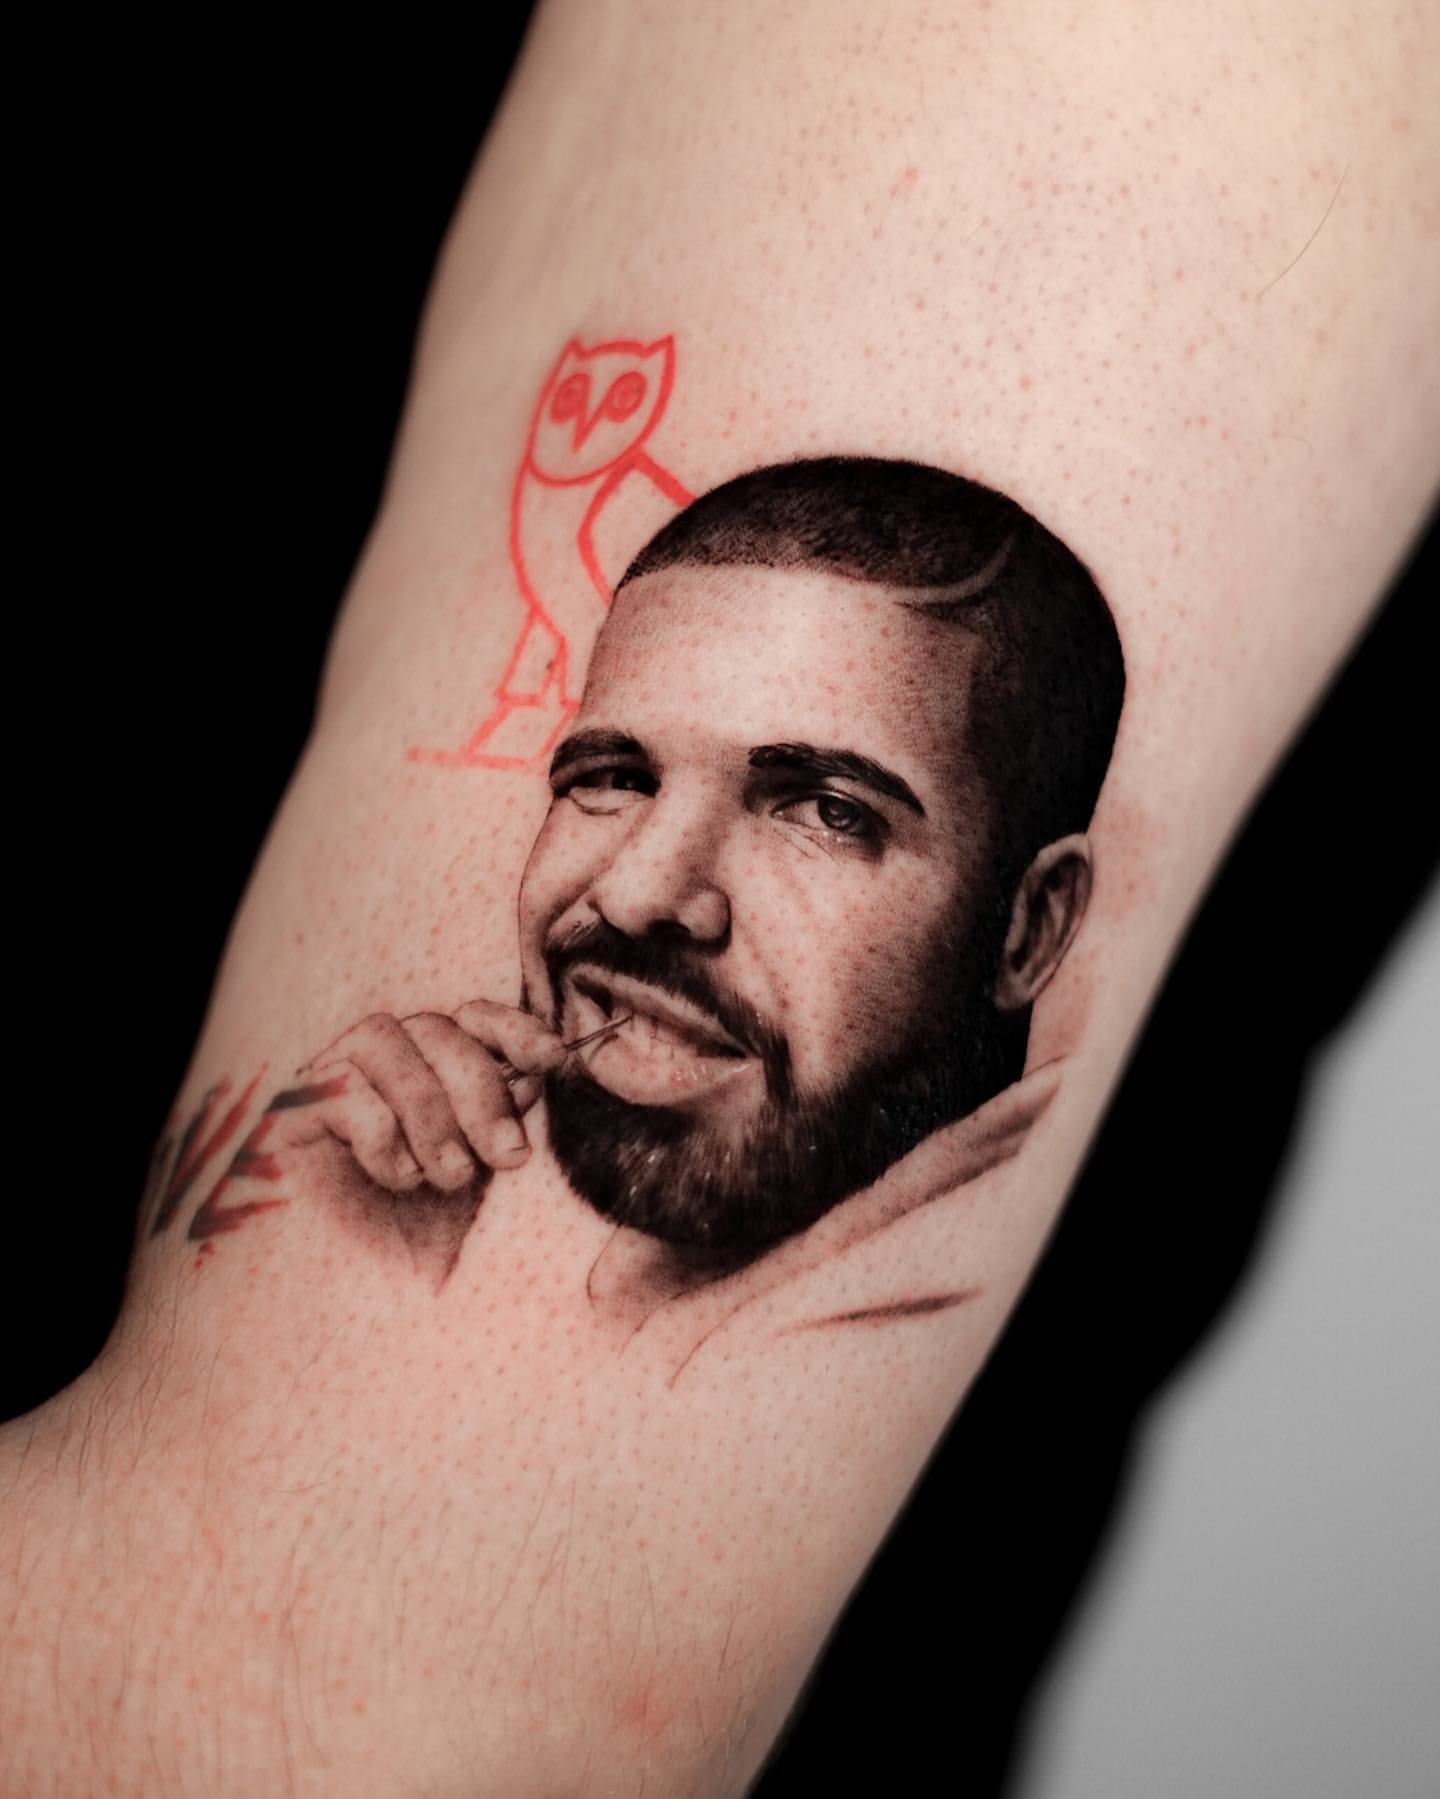 100 Coolest Music Tattoos for Men & Women - The Trend Spotter